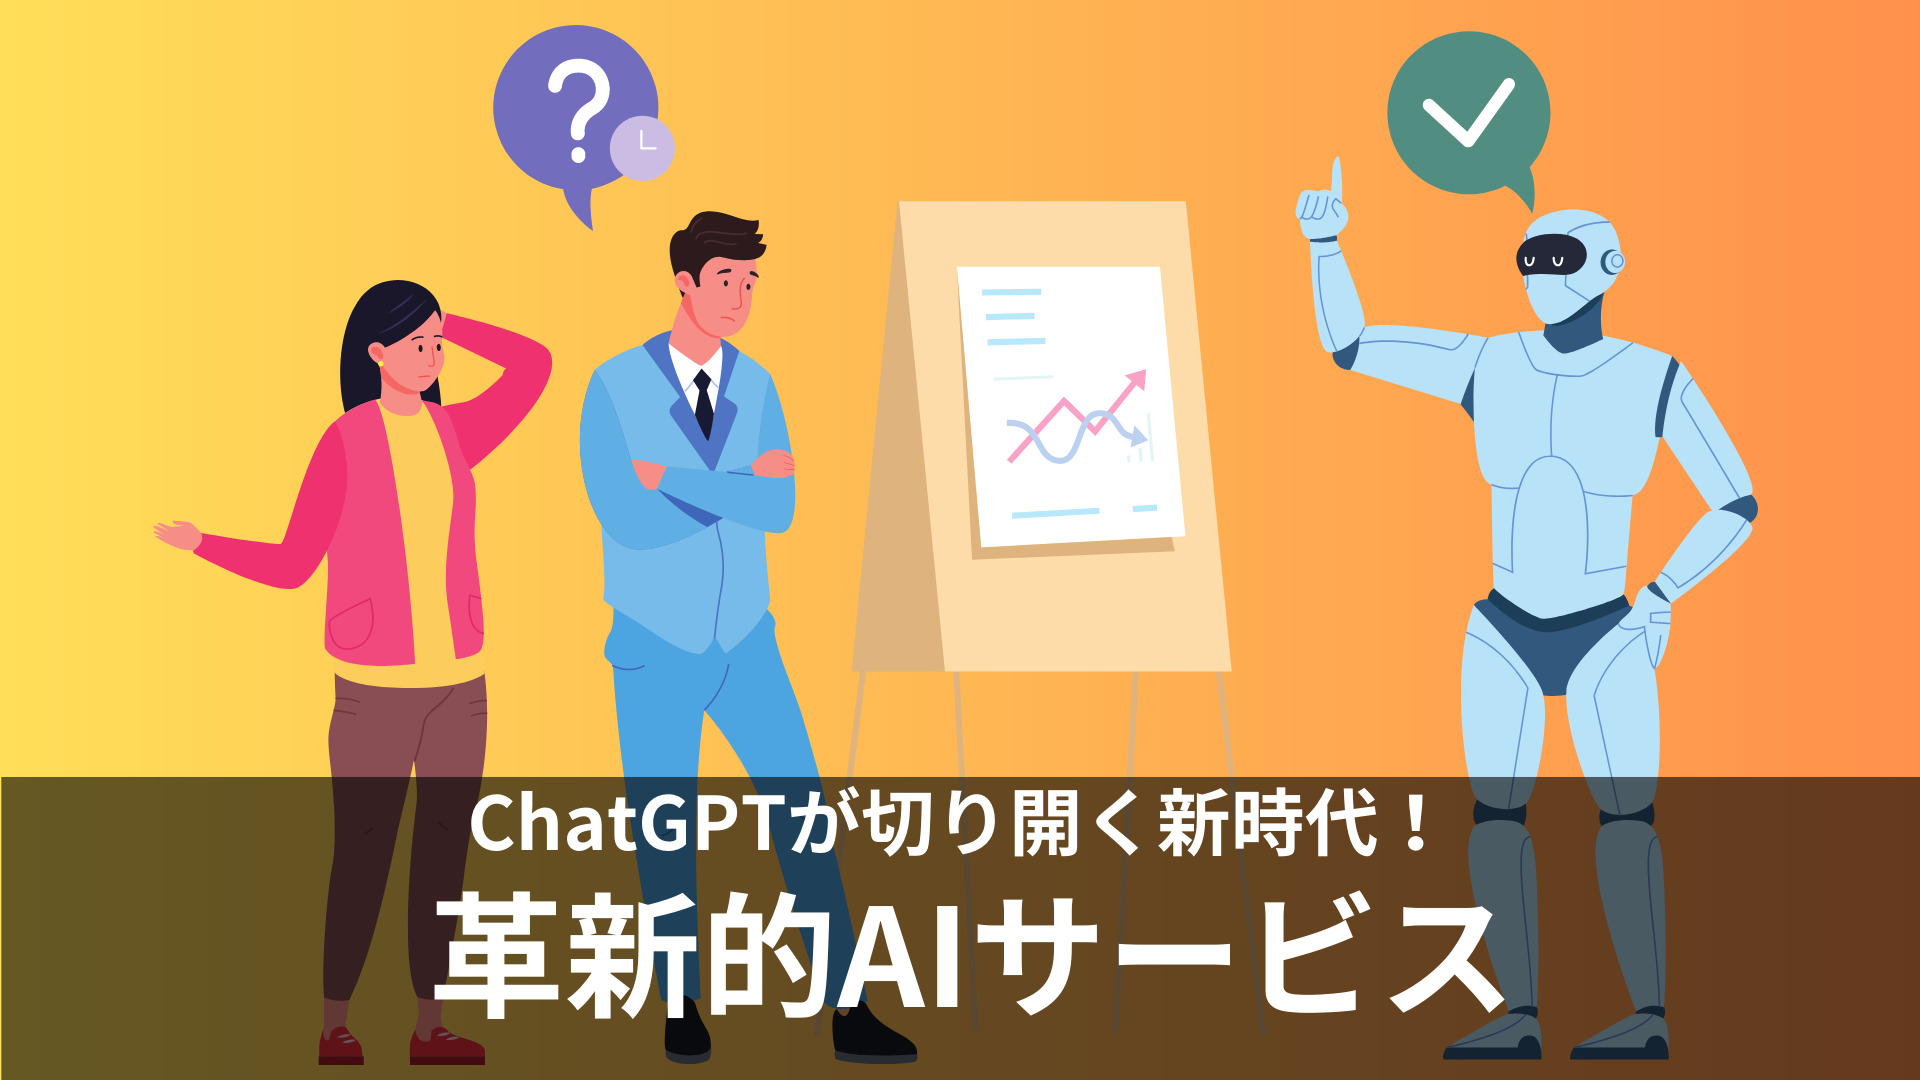 ChatGPTが切り開く新時代！AI技術を駆使した革新的サービス7選